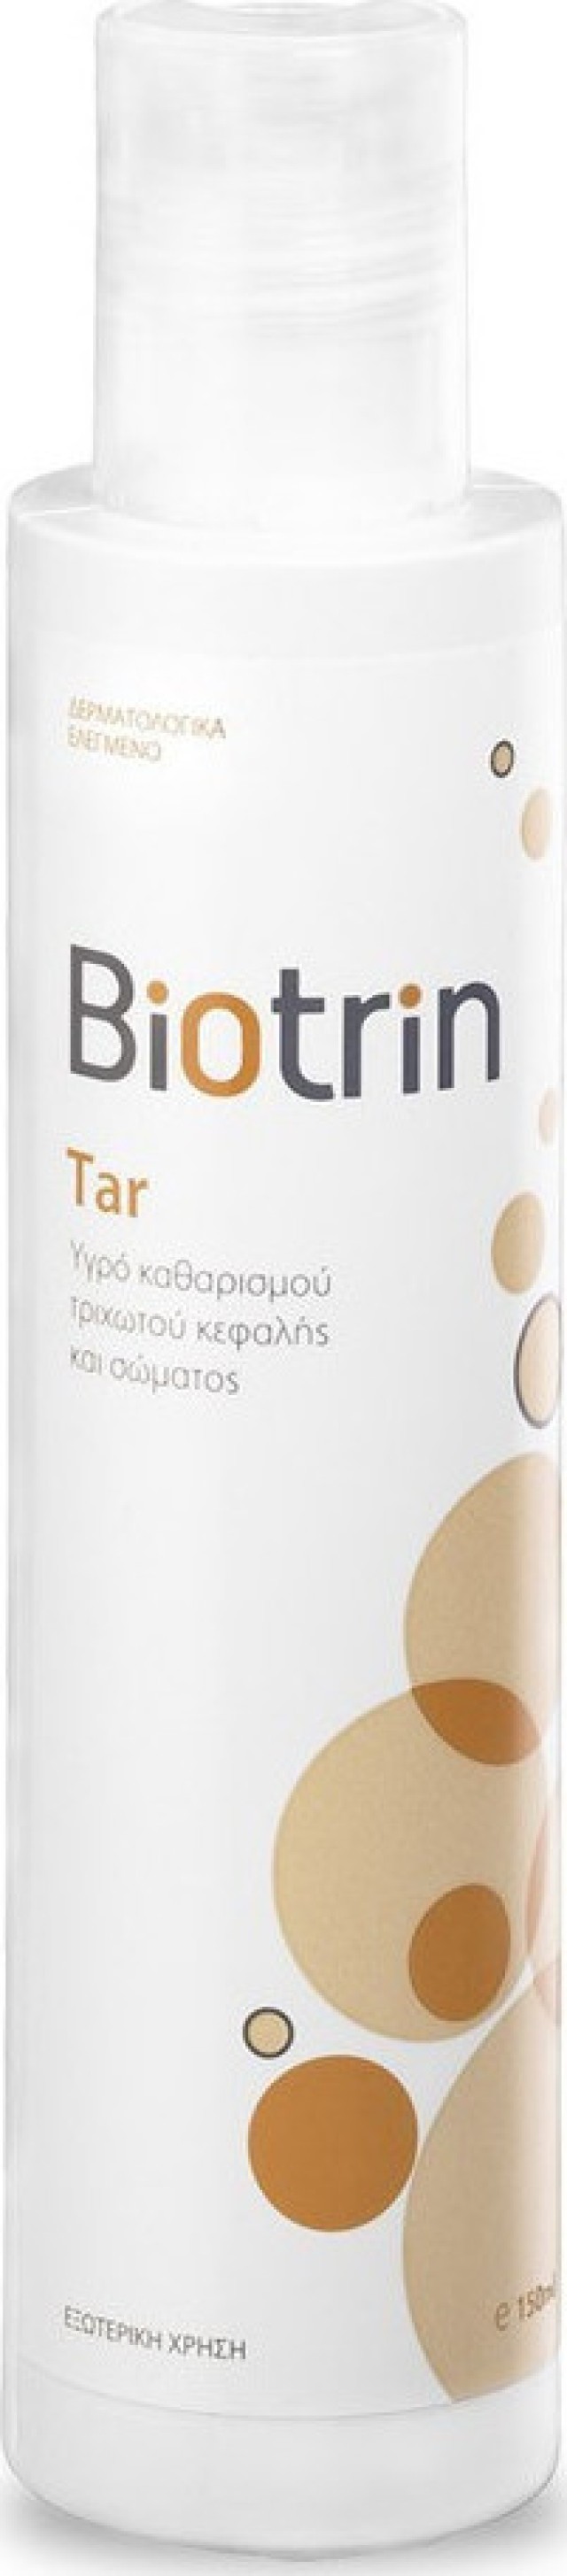 Biotrin Tar Cleansing Liquid Υγρό Καθαρισμού Τριχωτού Κεφαλής & Σώματος Κατά της Σμηγματορροϊκής Δερματίτιδας & Υπερκεράτωσης, 150ml